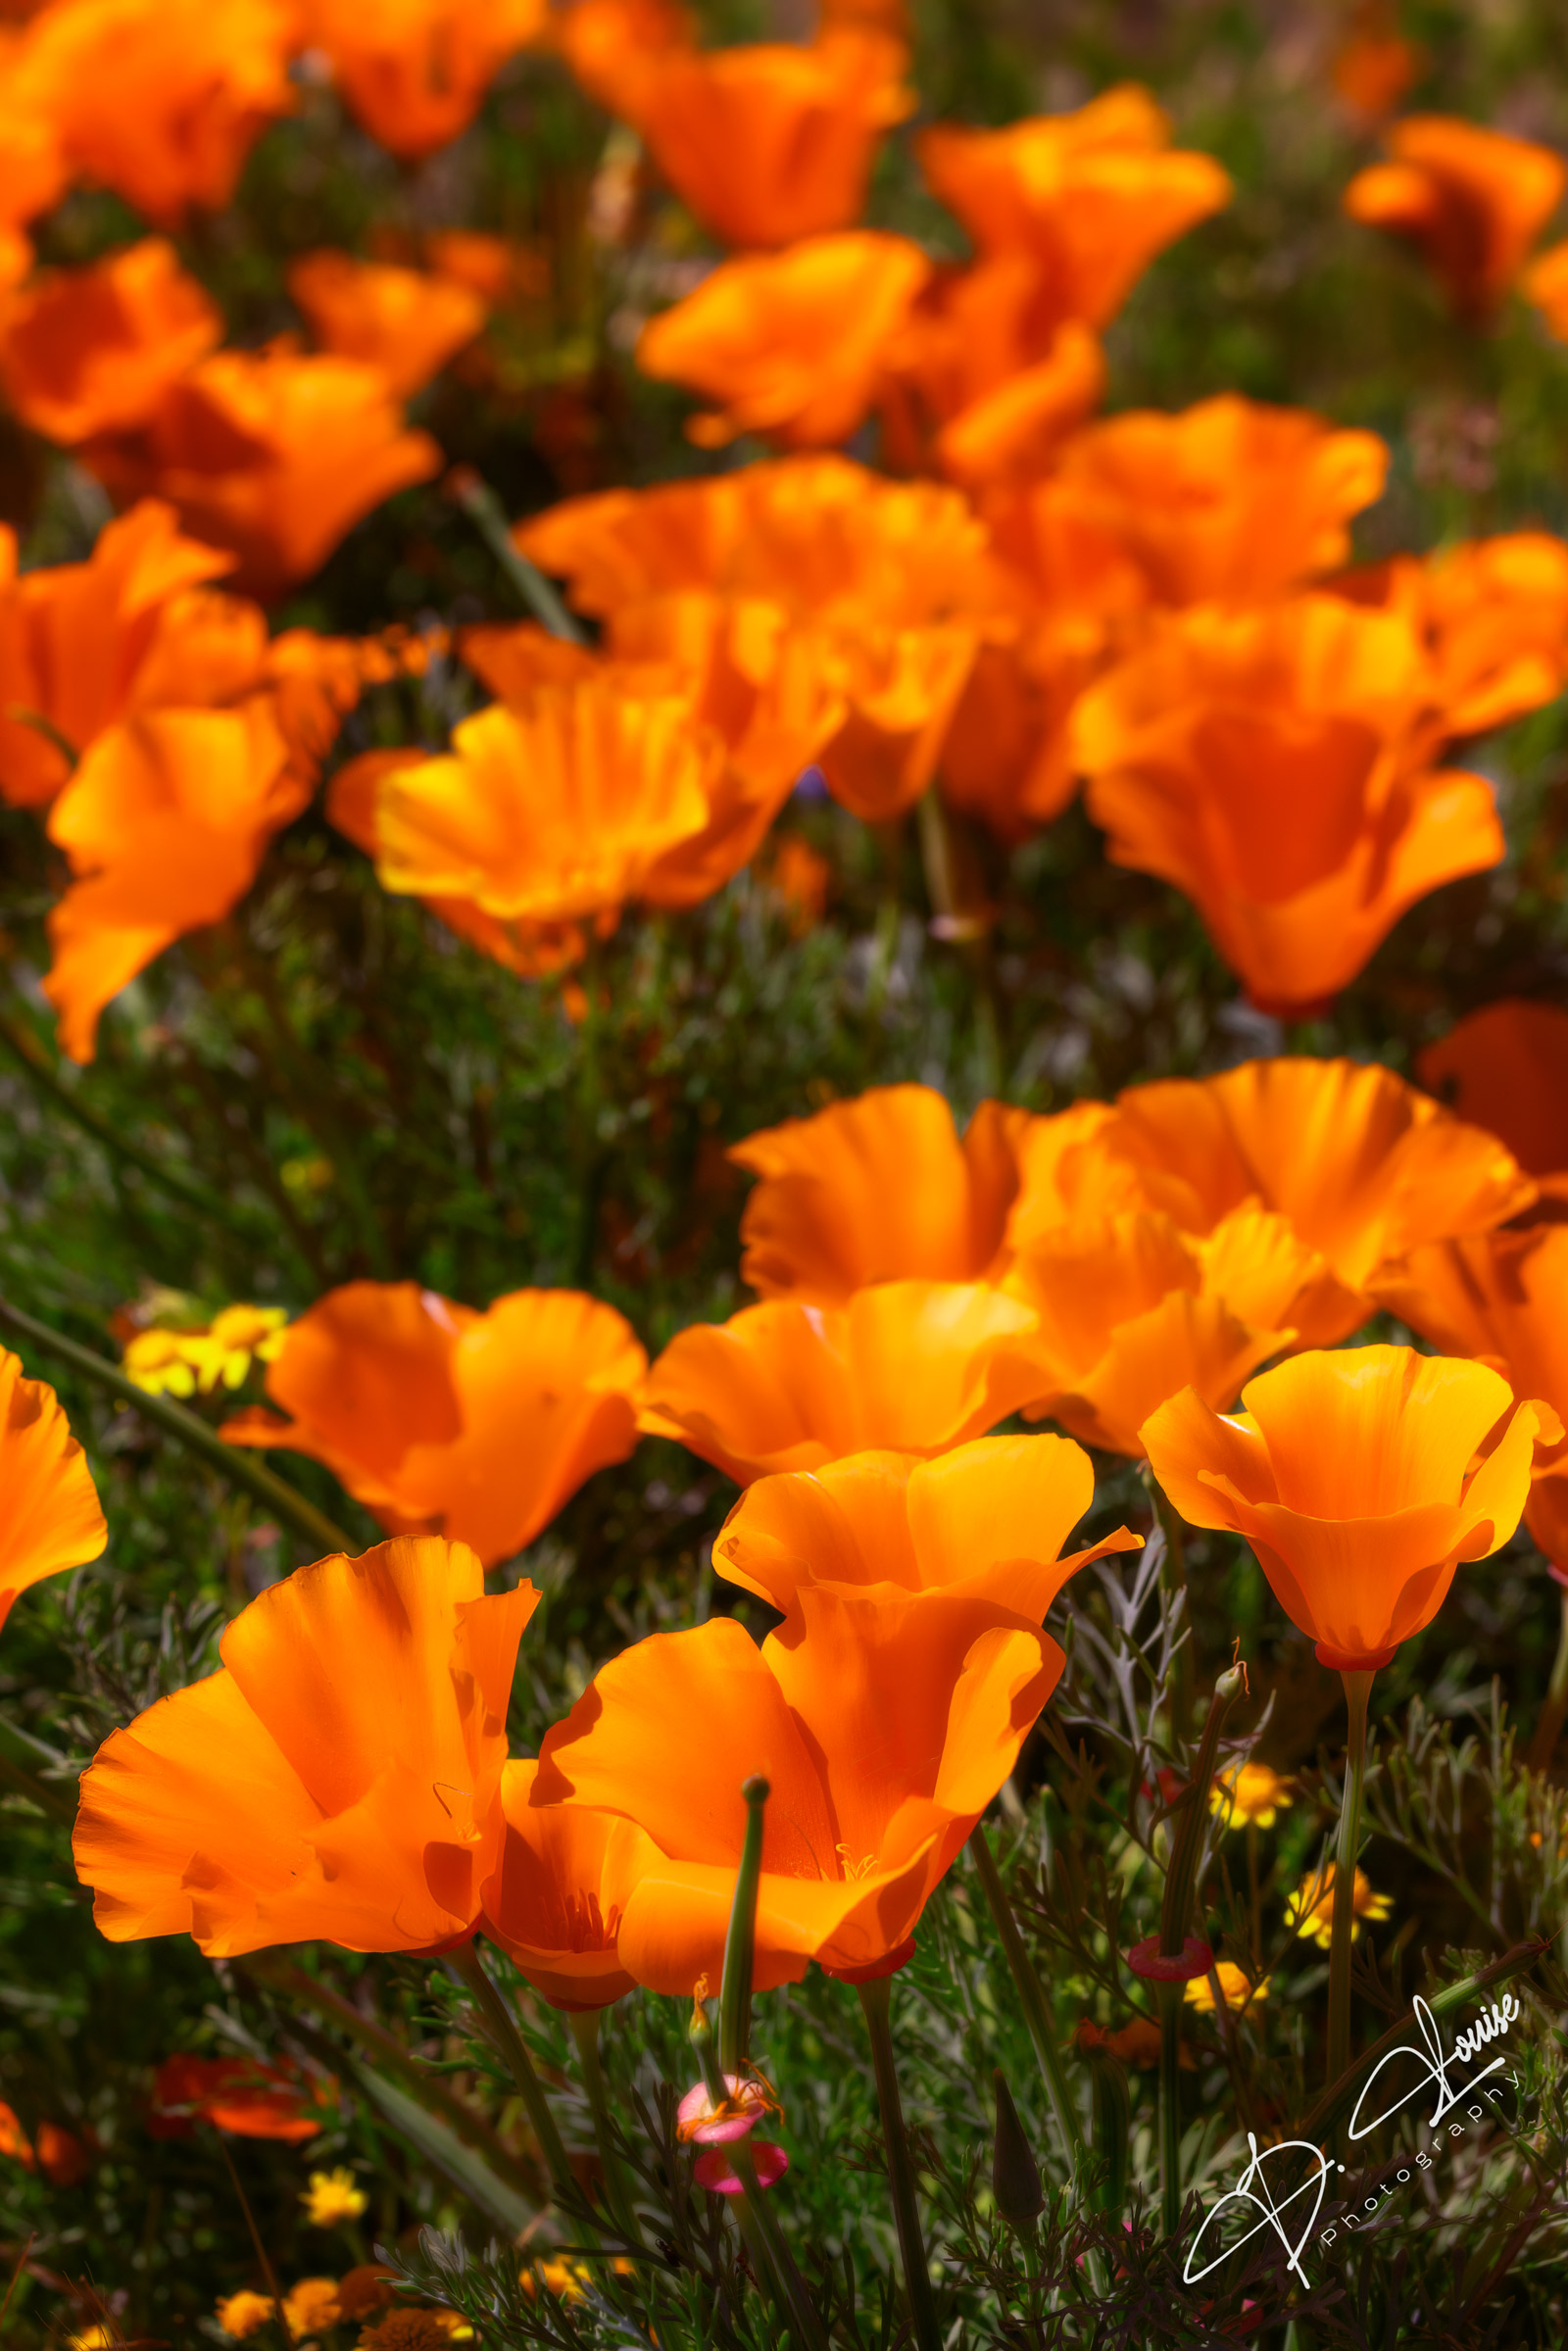 Orange Poppy Flowers. The California state flower